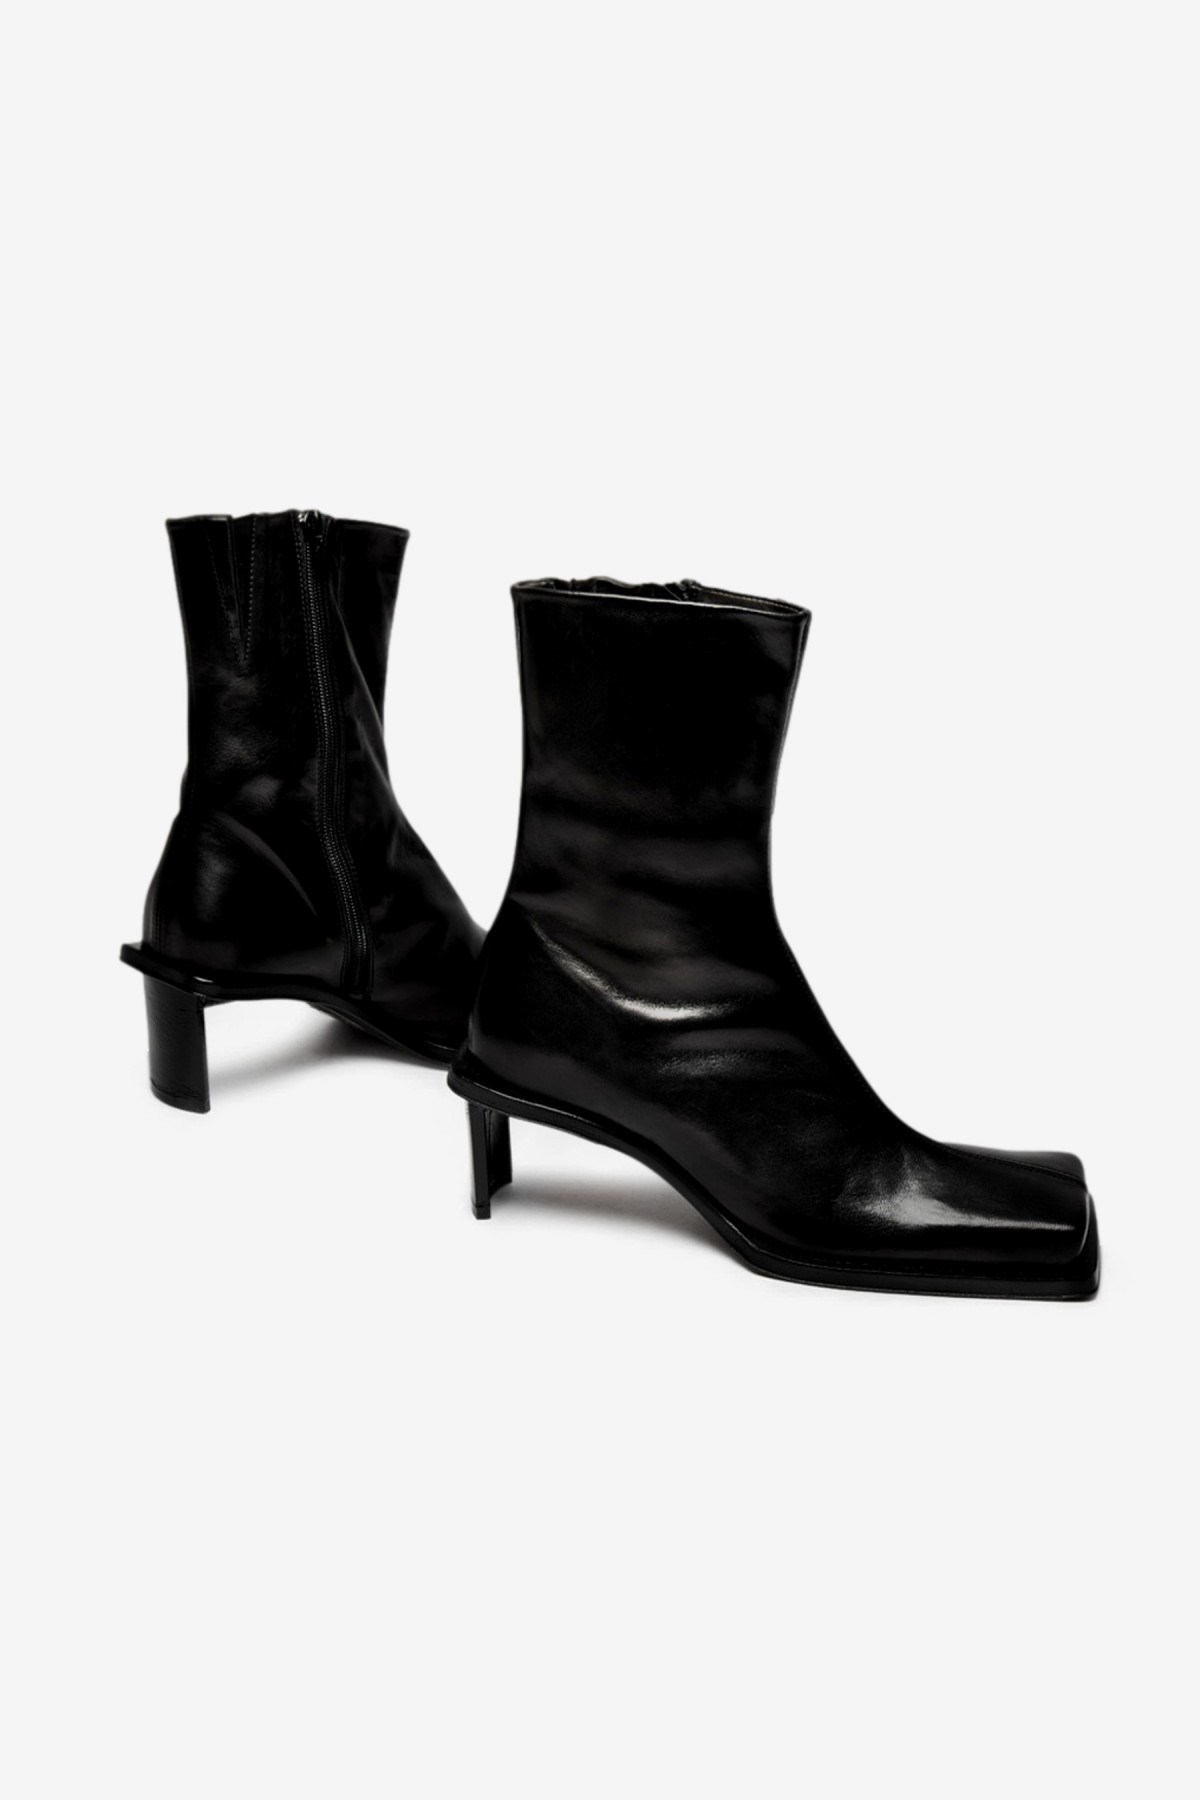 Miista Brenda Sonic Ankle Boots in Black